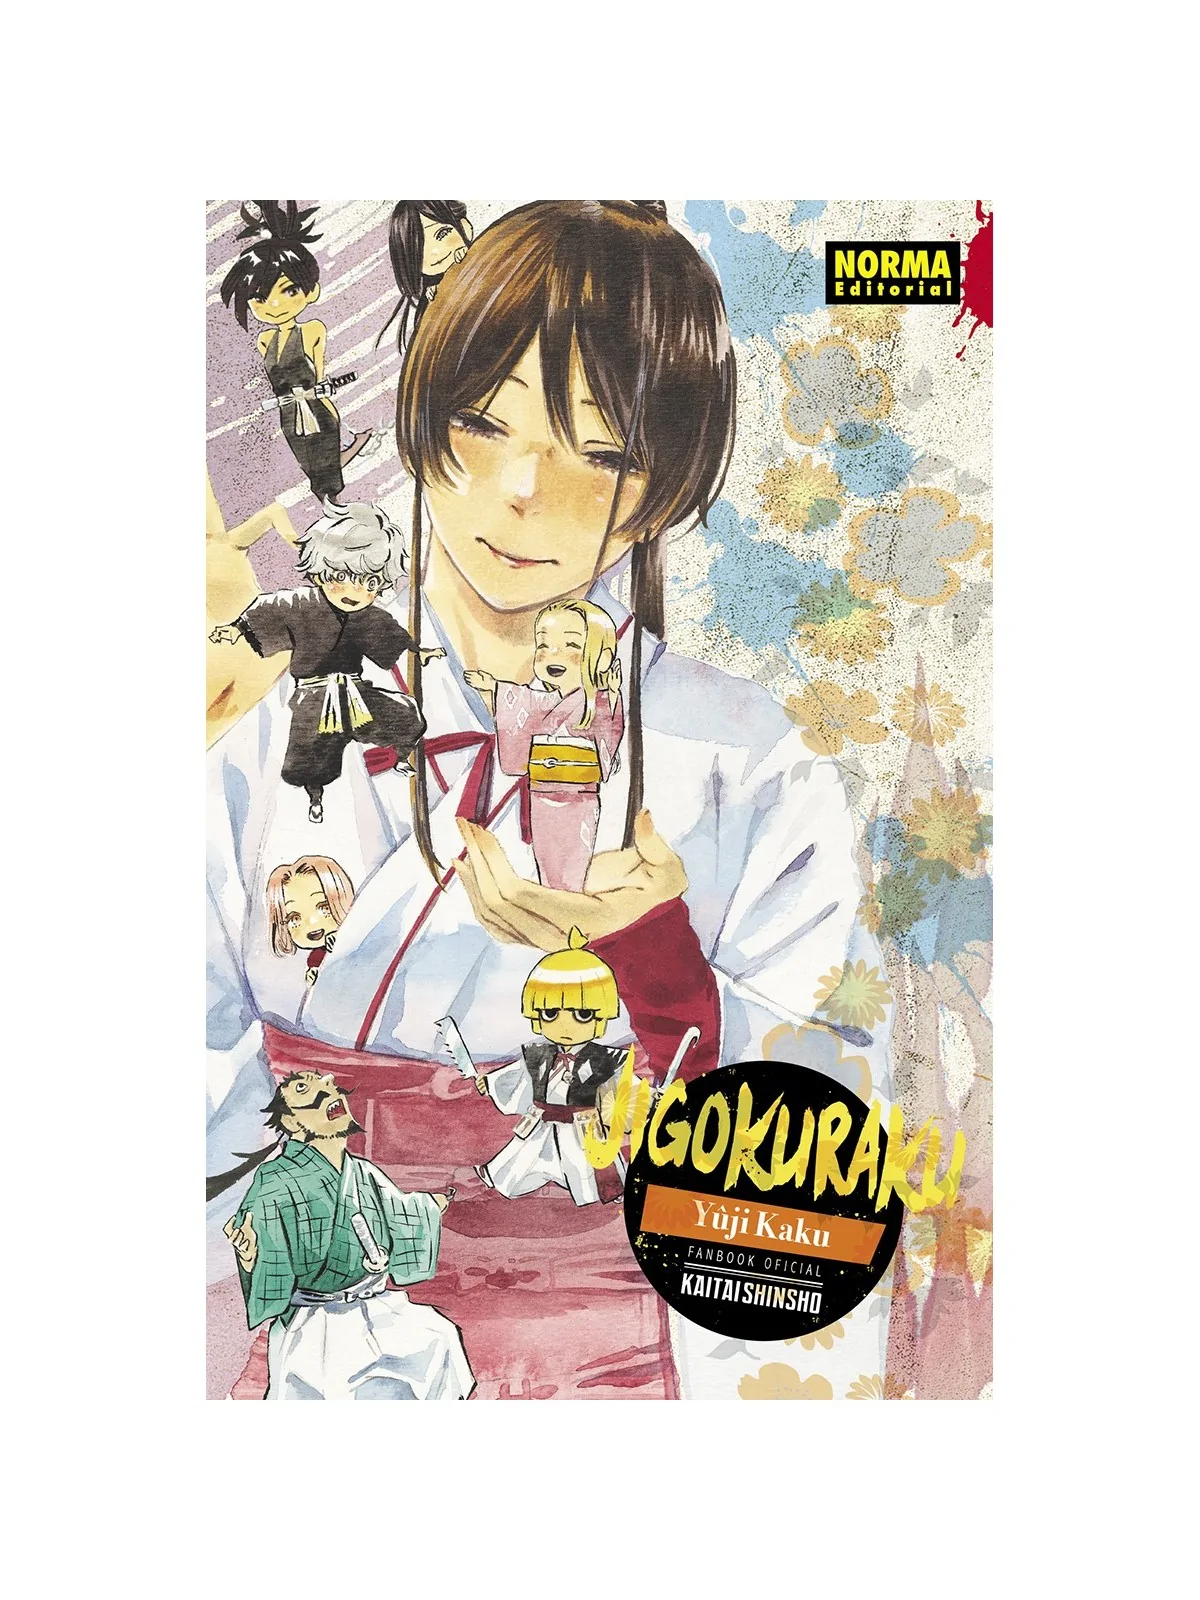 Comprar Jigokuraku Fanbook (Kaitaishinsho) barato al mejor precio 13,3